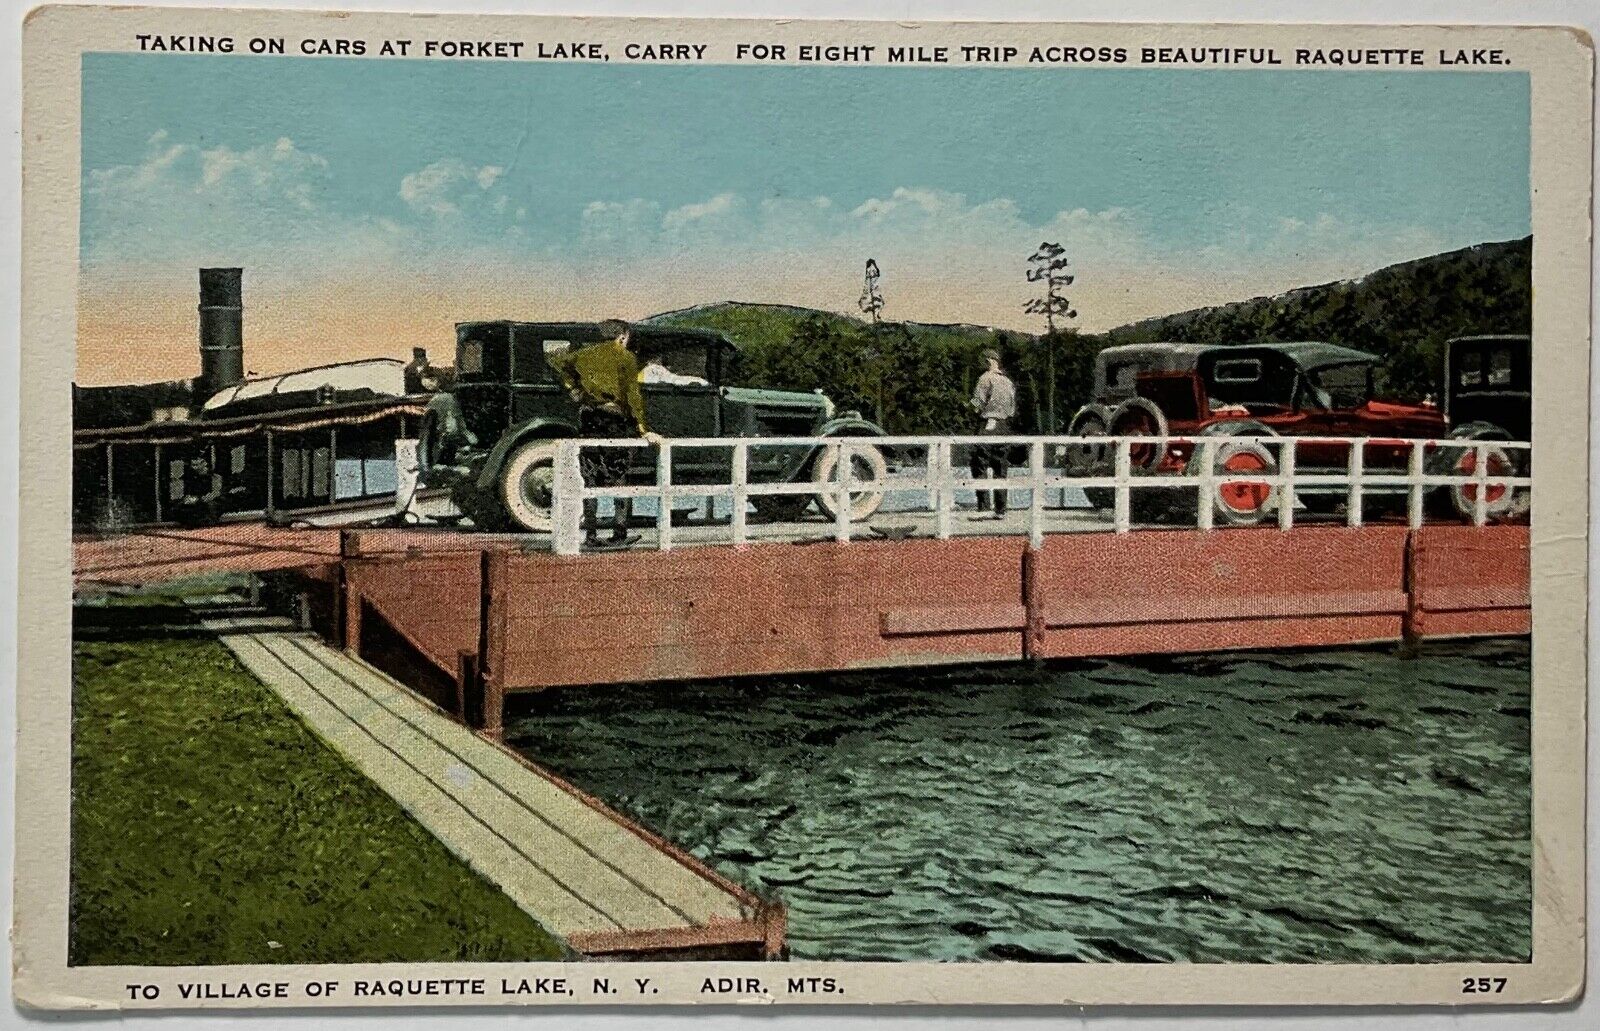 Forket Lake Car Ferry Raquette Lake Adirondacks New York Postcard c1920s